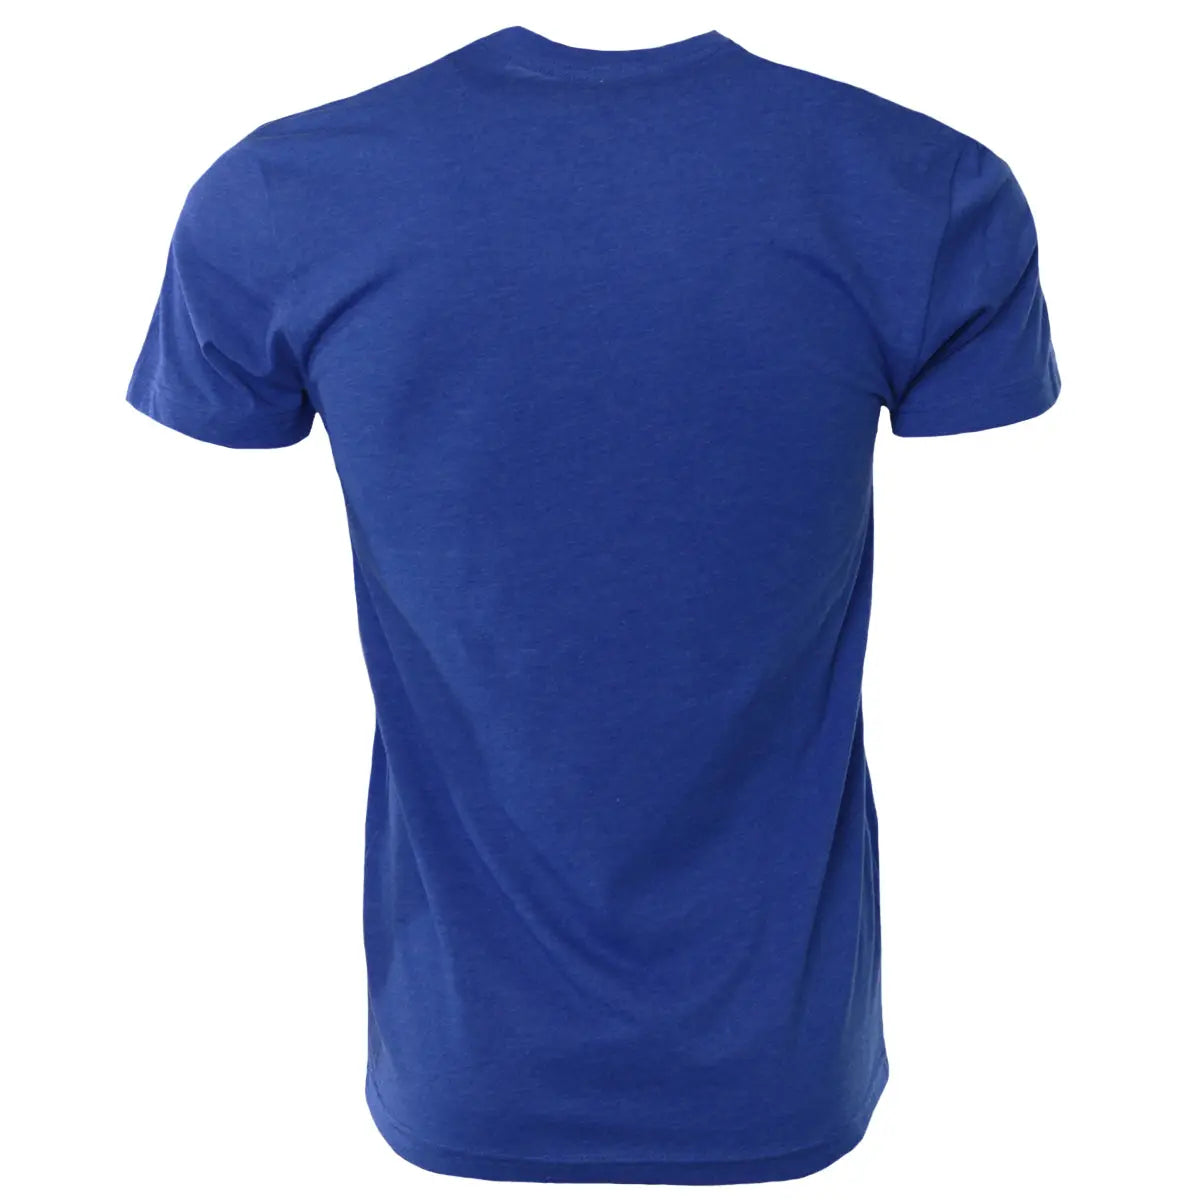 Forza Sports "Immortal Crest" MMA T-Shirt - Royal Blue Forza Sports